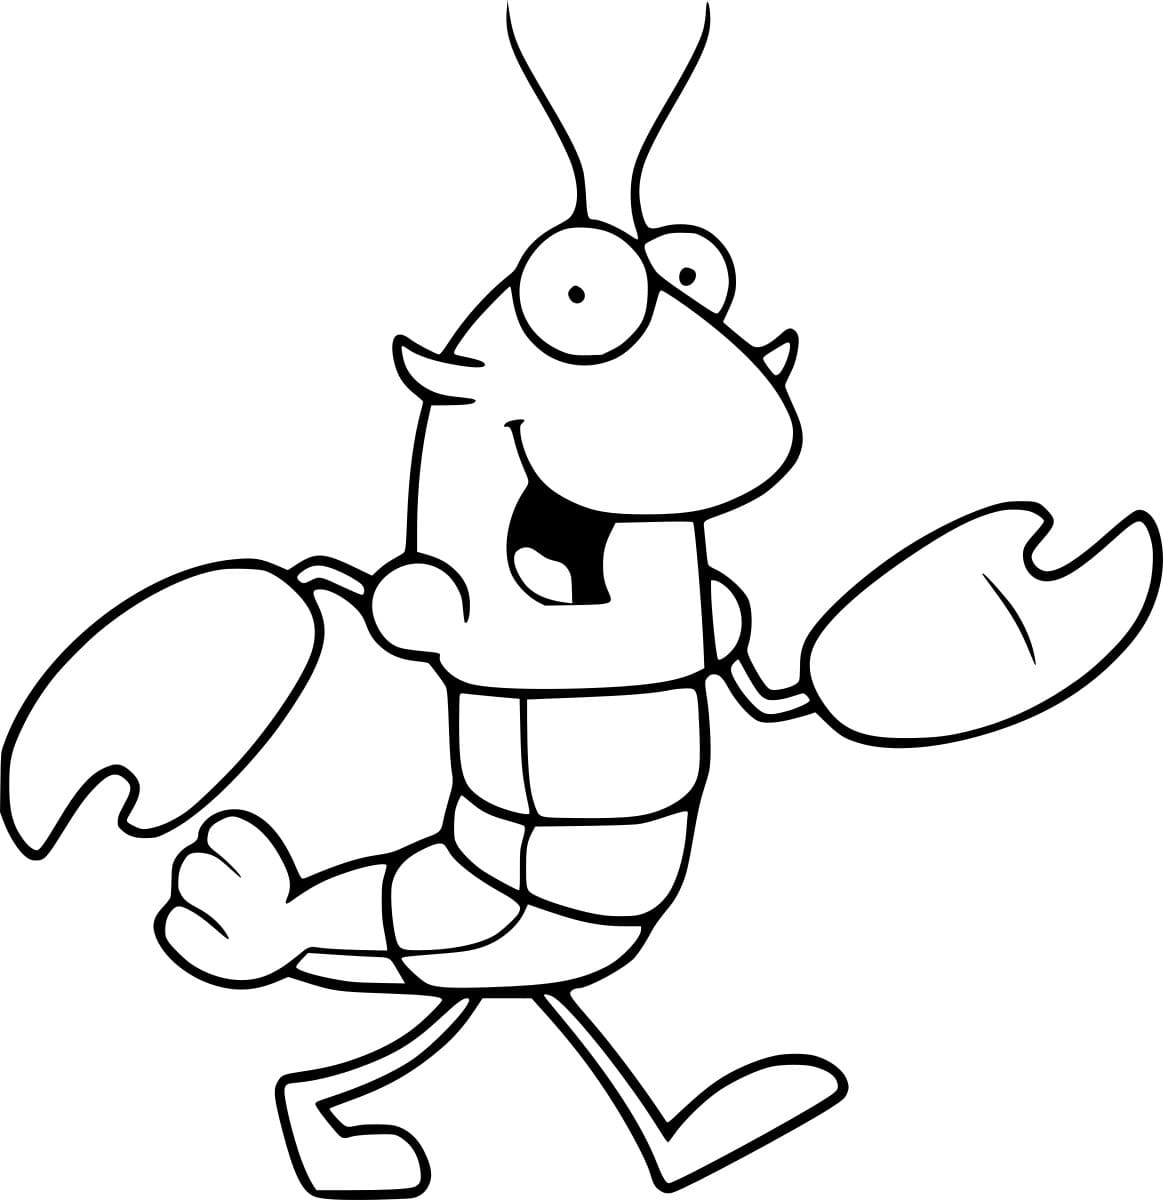 Cartoon Walking Lobster Coloring Page